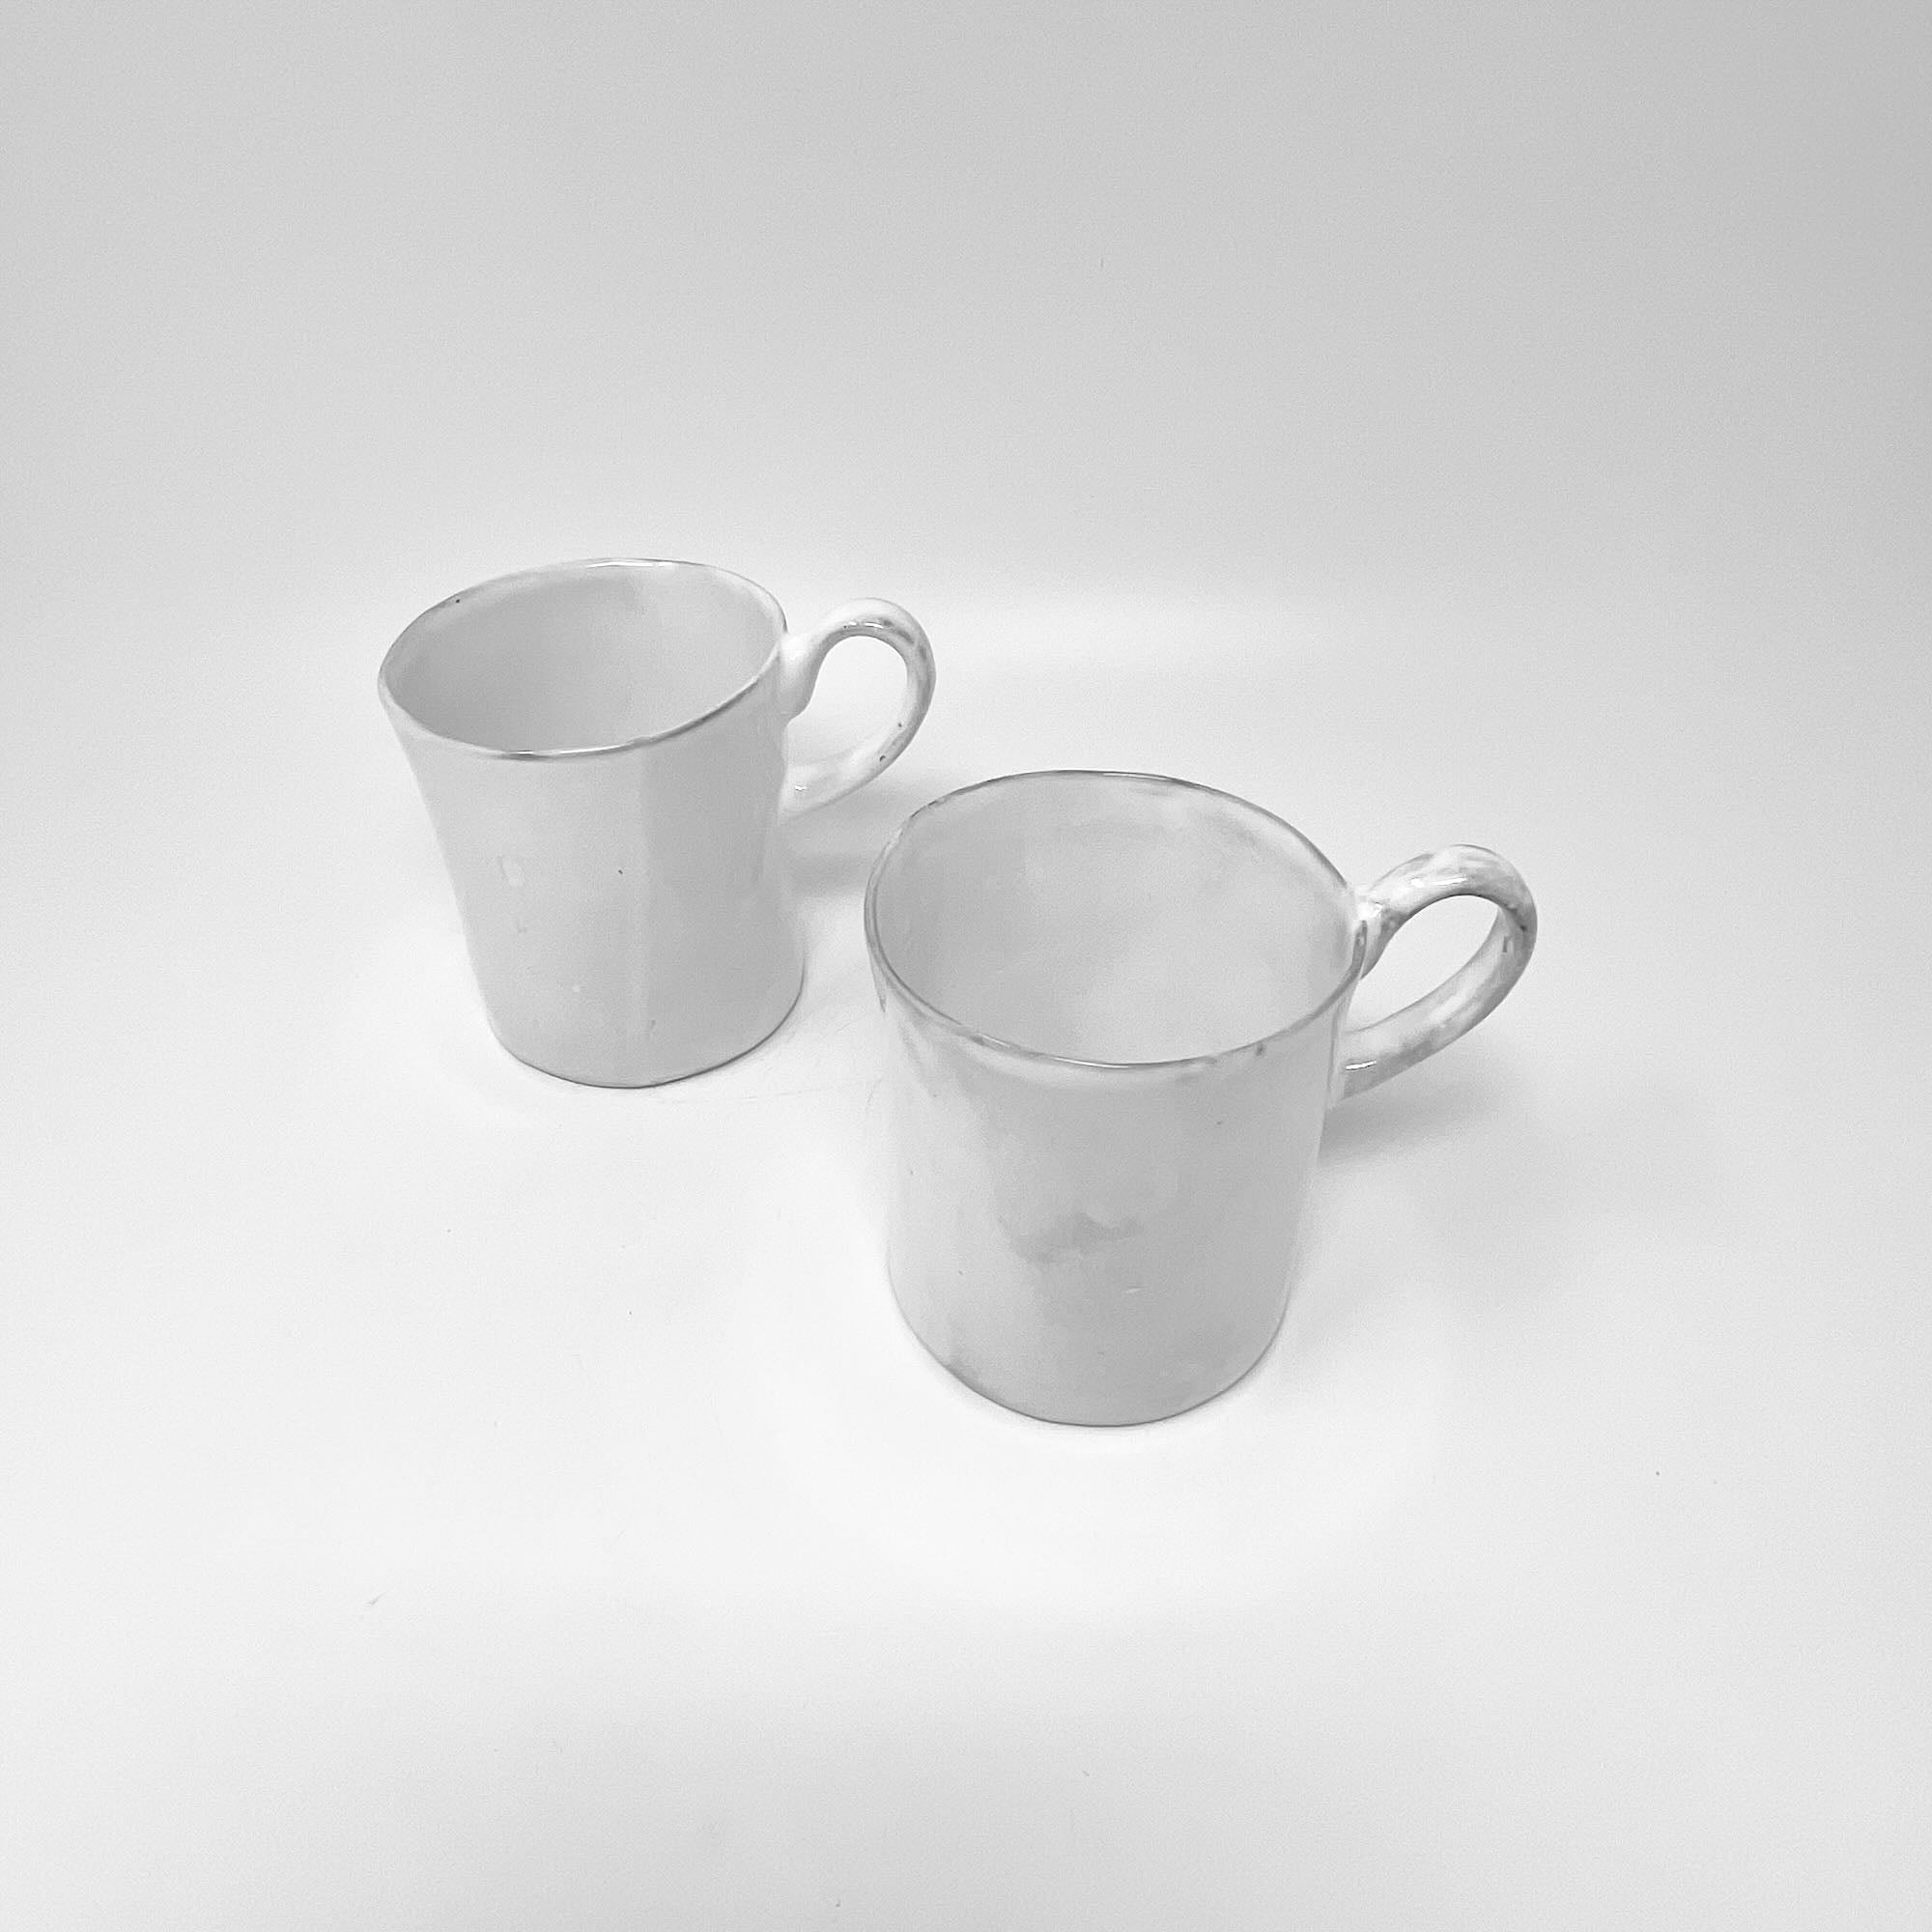 2x Paris mugs with handle